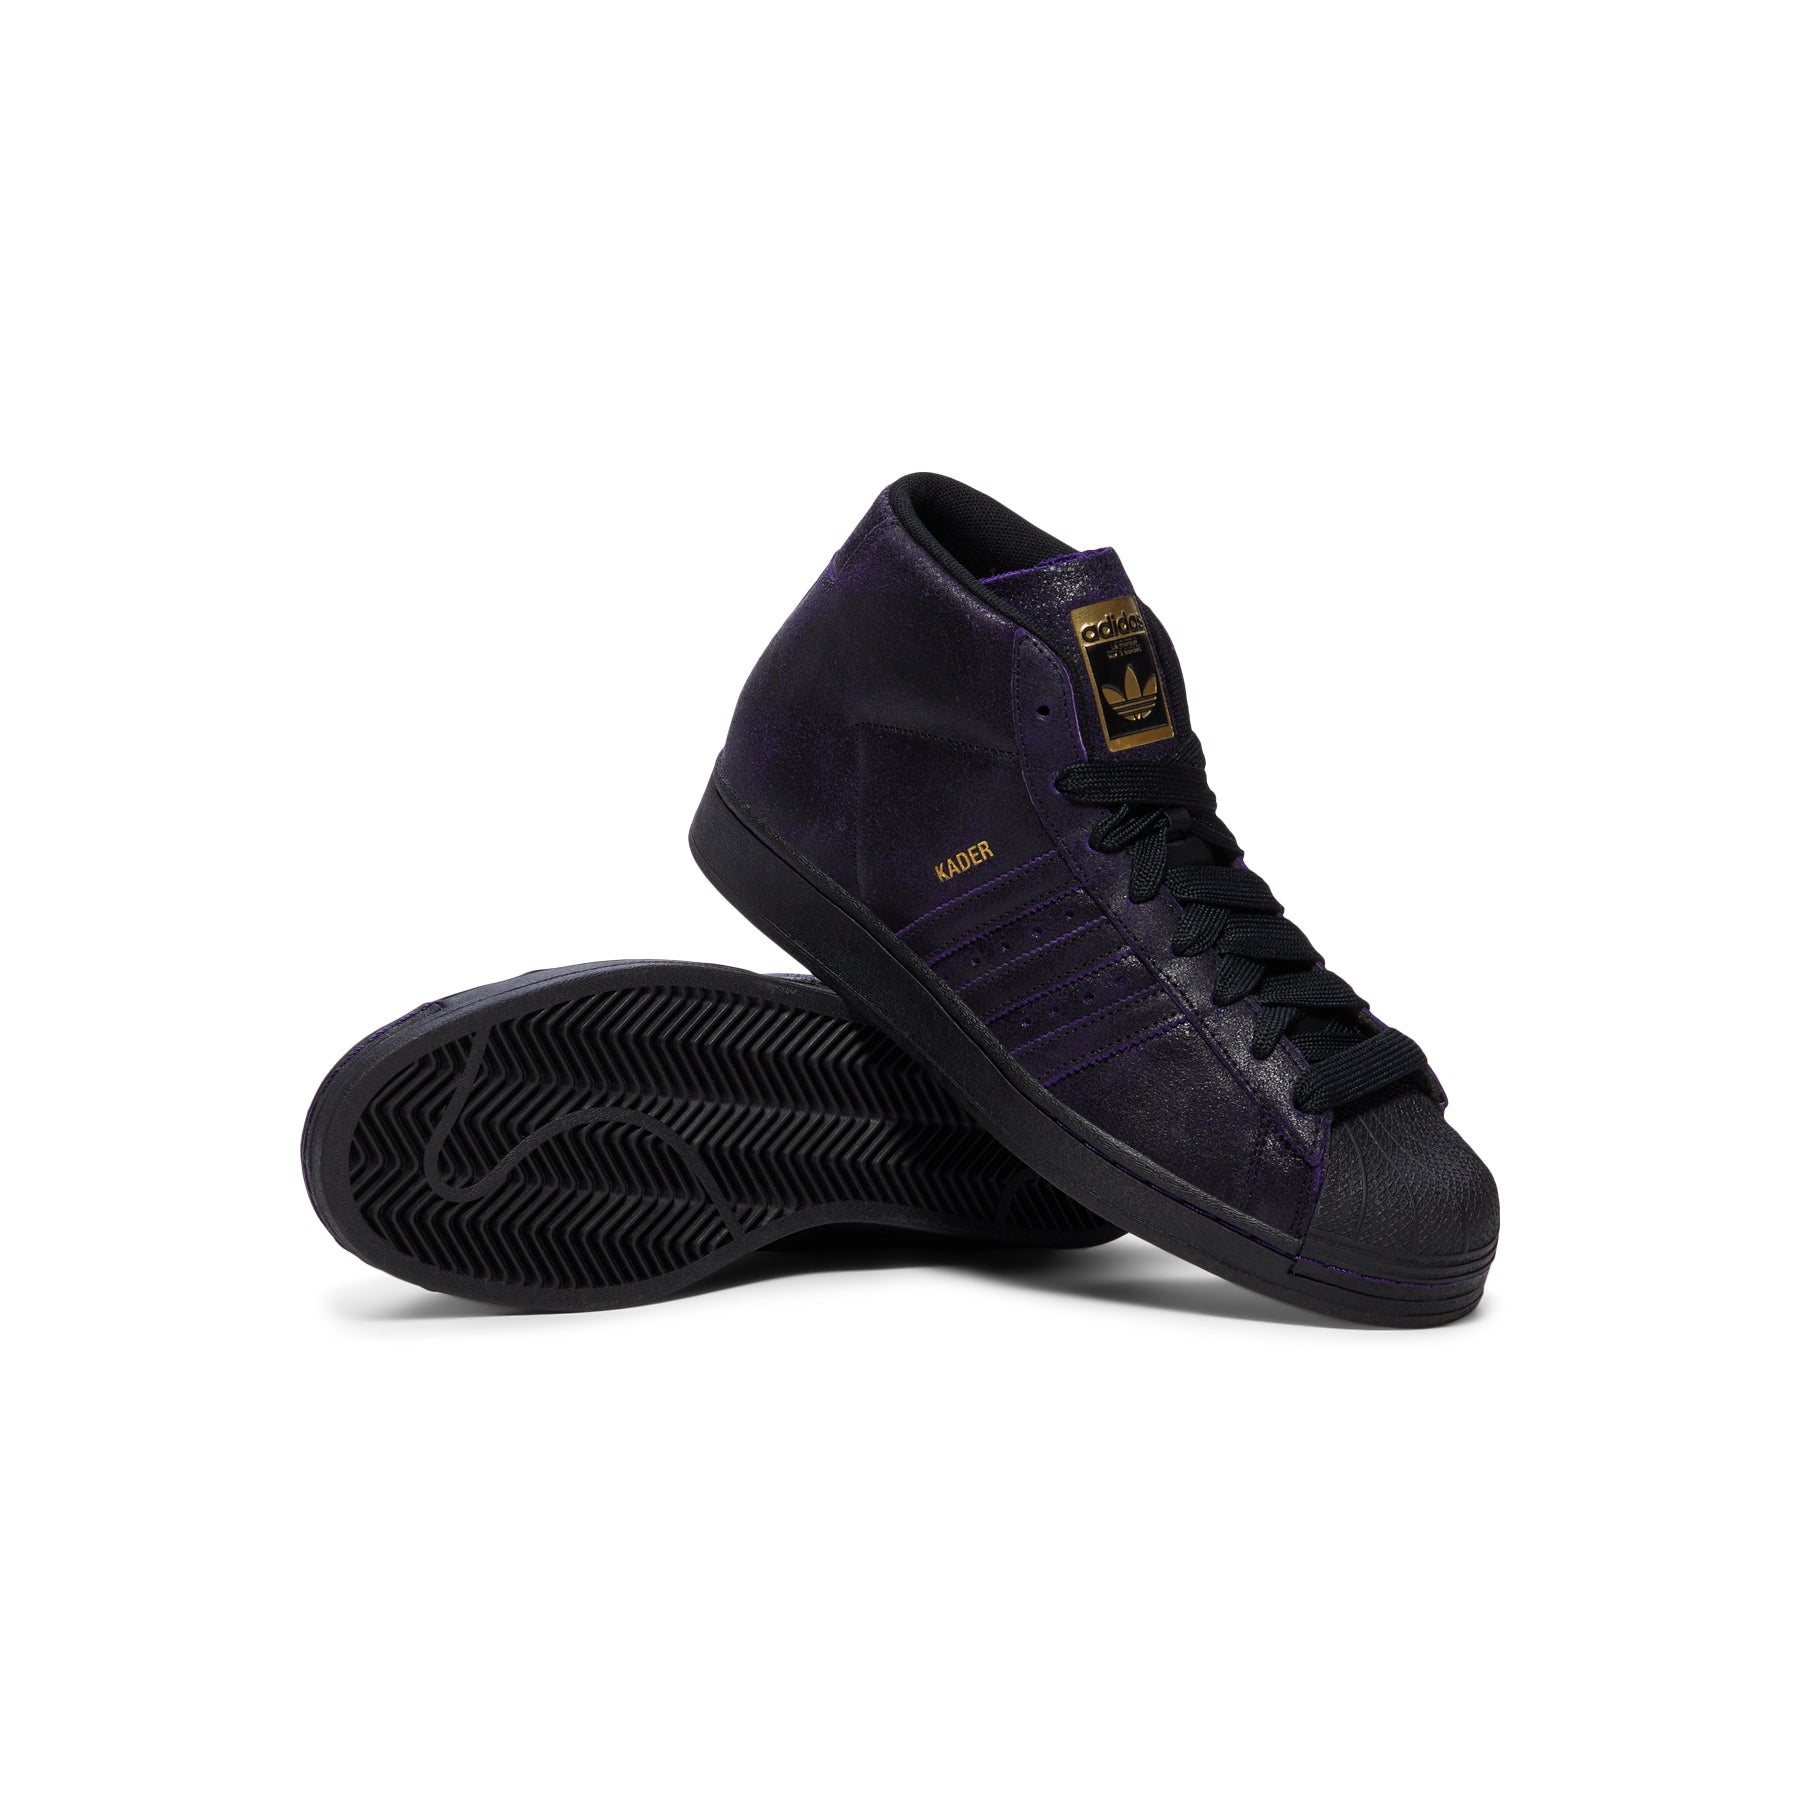 adidas x Kader Pro Model ADV (Core Black/Dark Purple) – Concepts